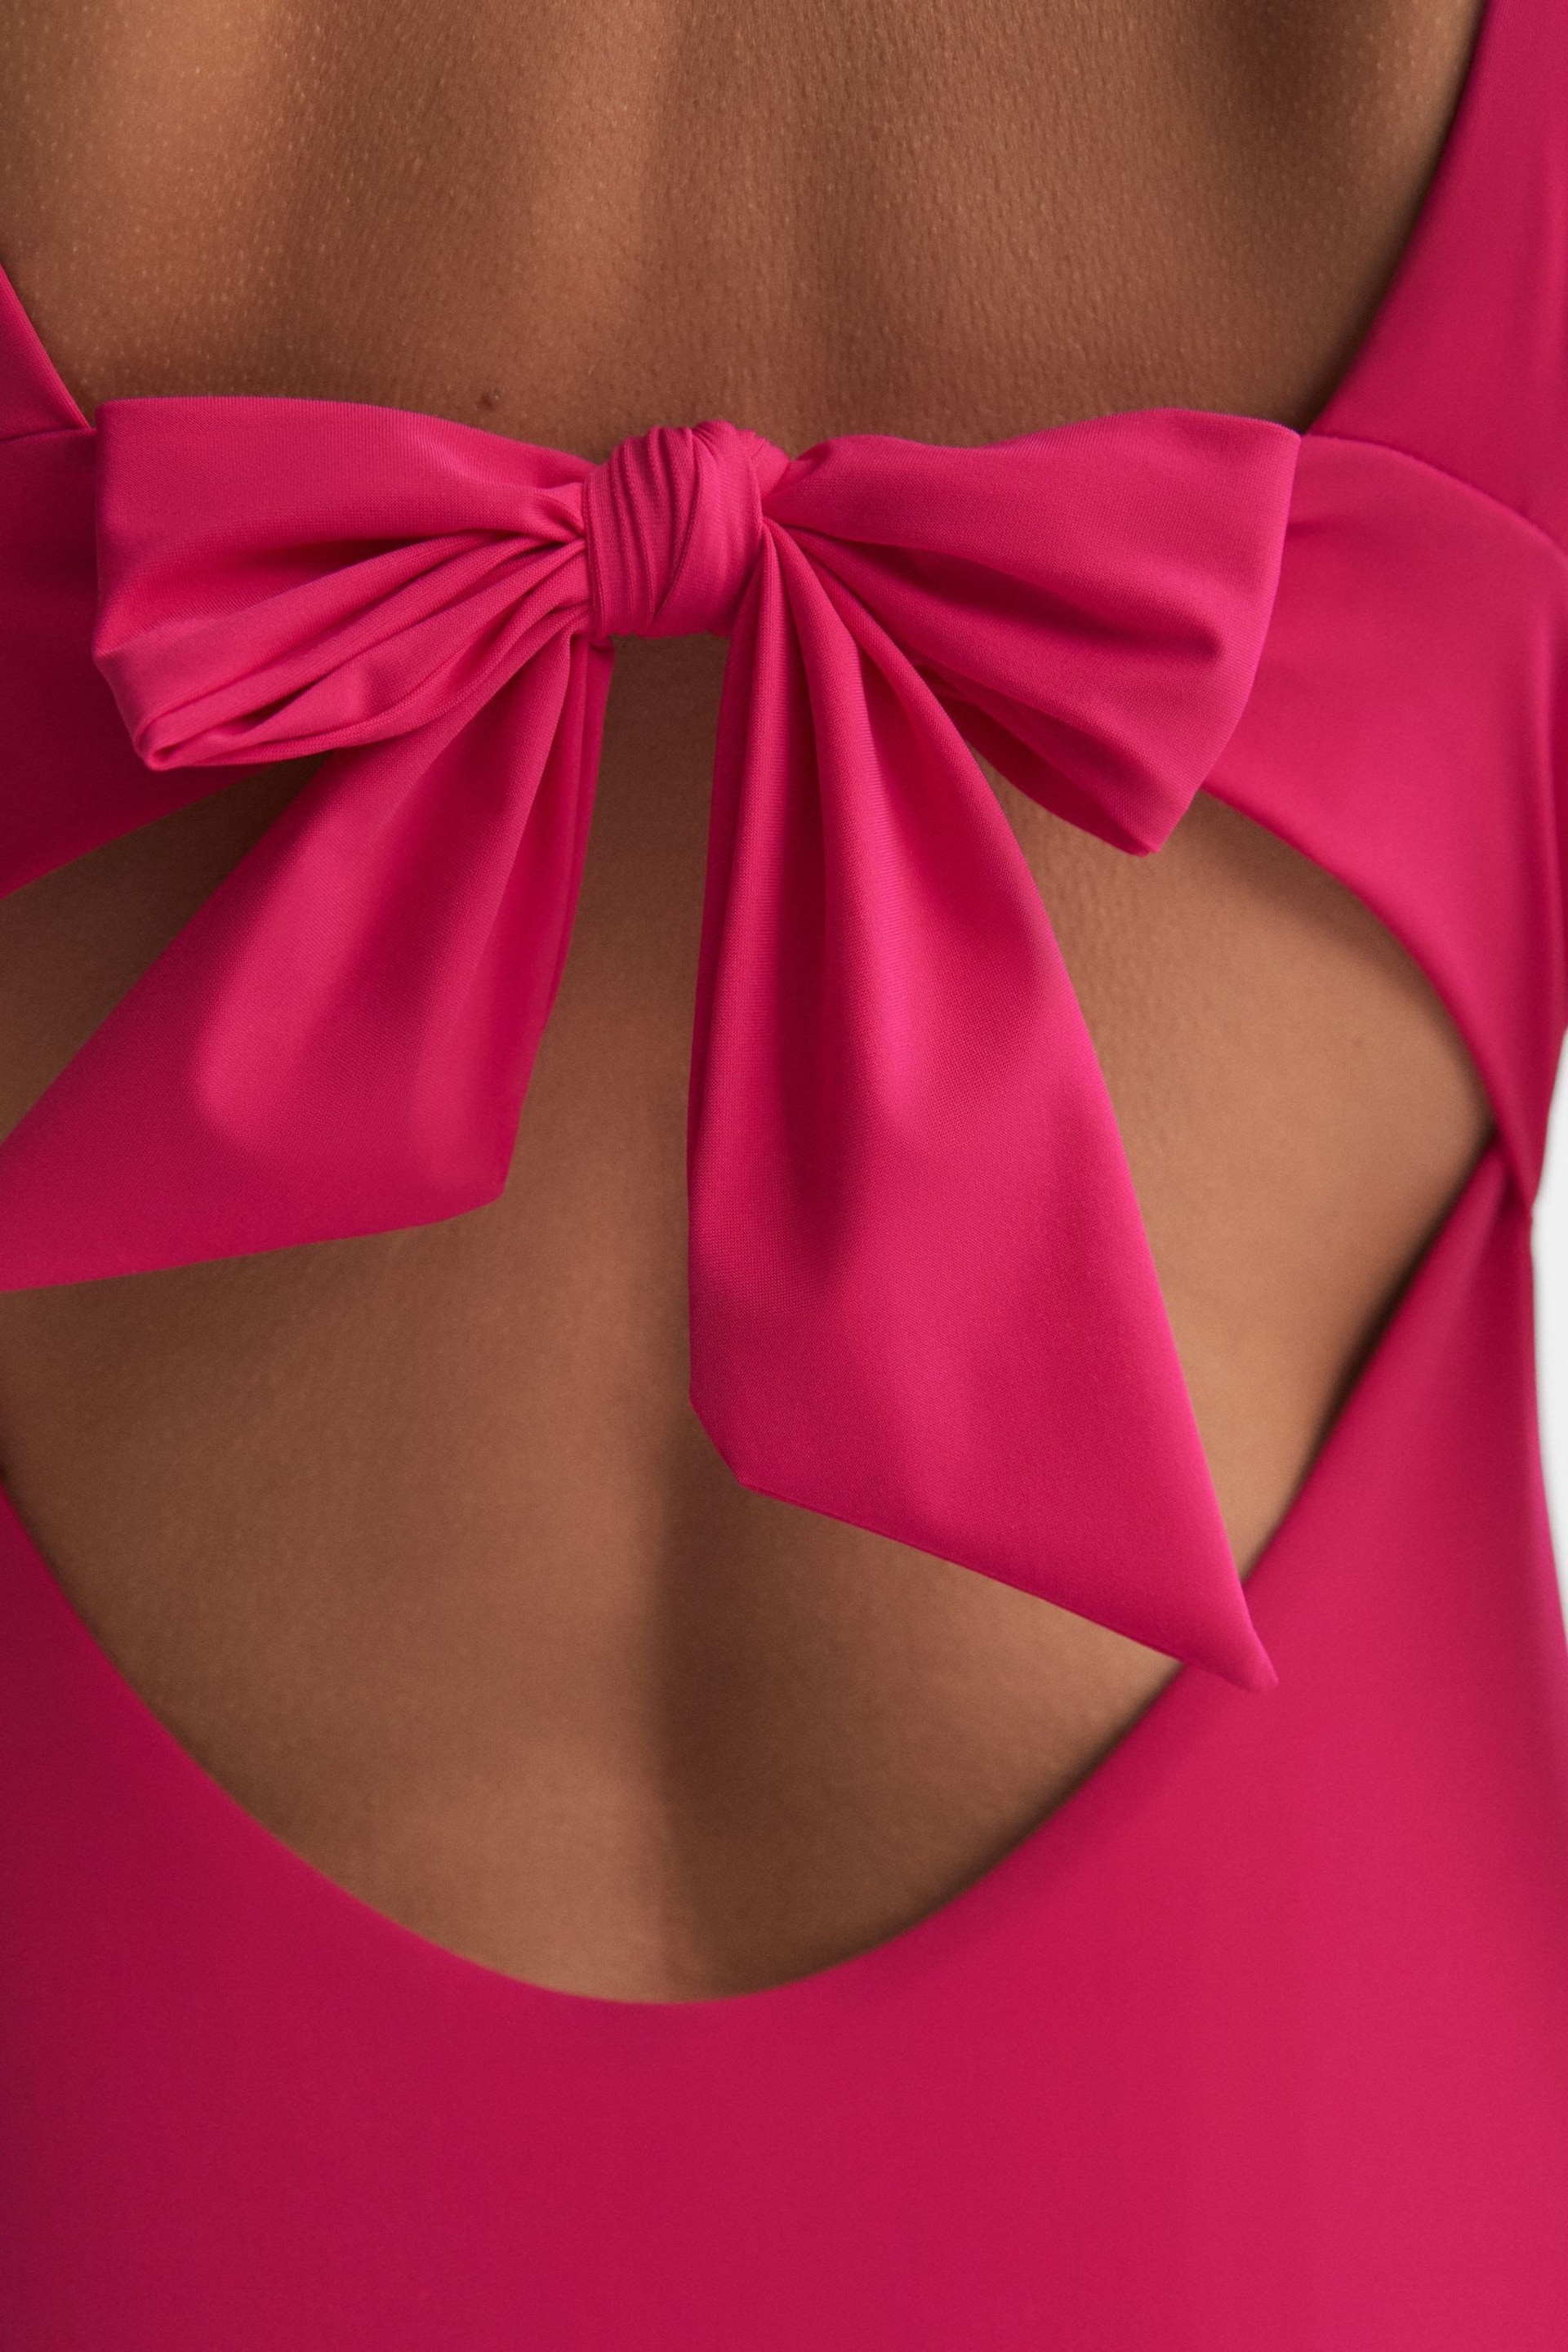 Reiss Pink Luna Italian Fabric Swimsuit - Image 4 of 5